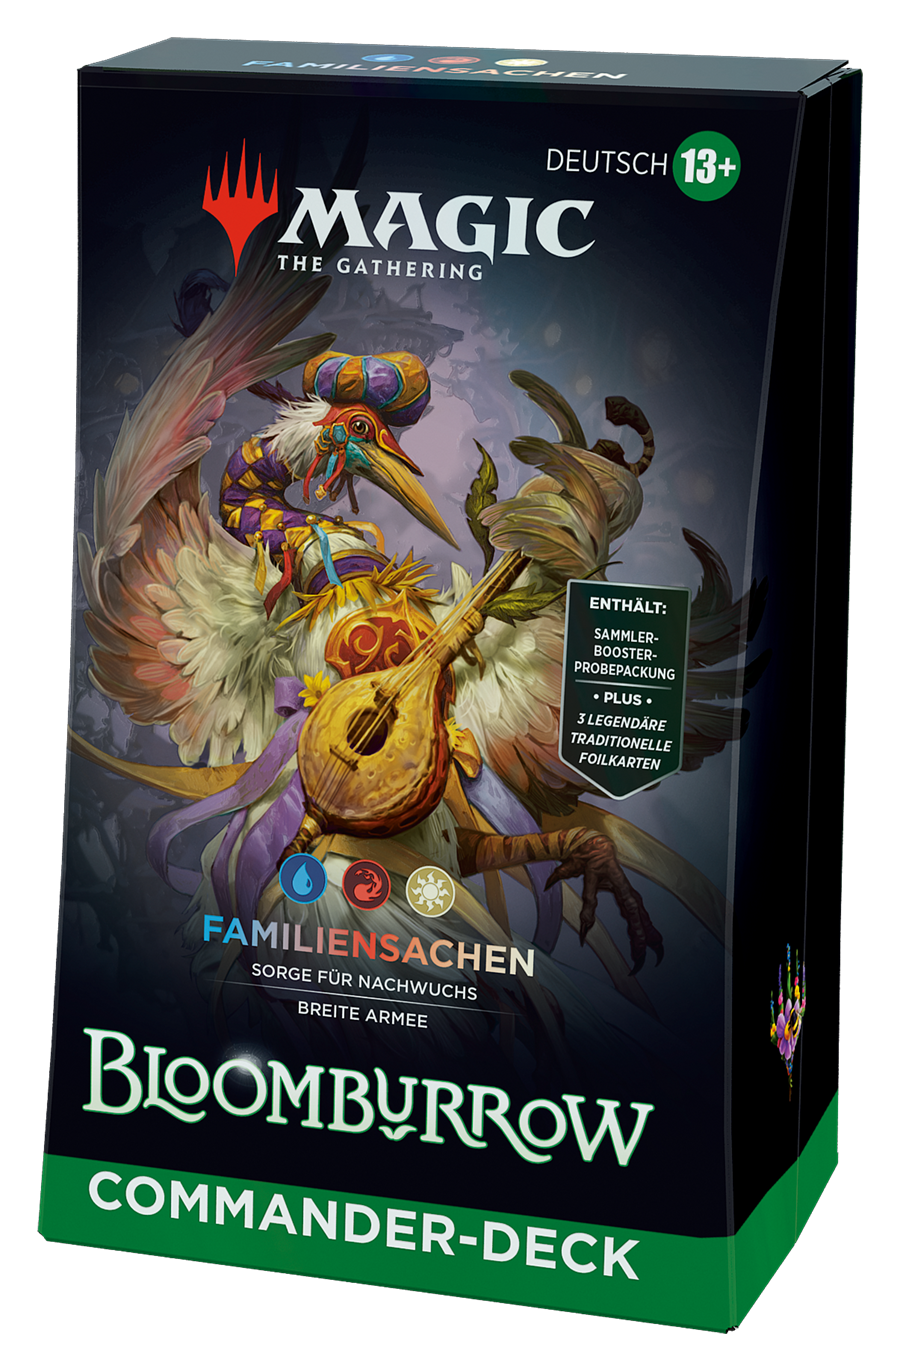 Bloomburrow Commander Deck "Familiensachen" deutsch